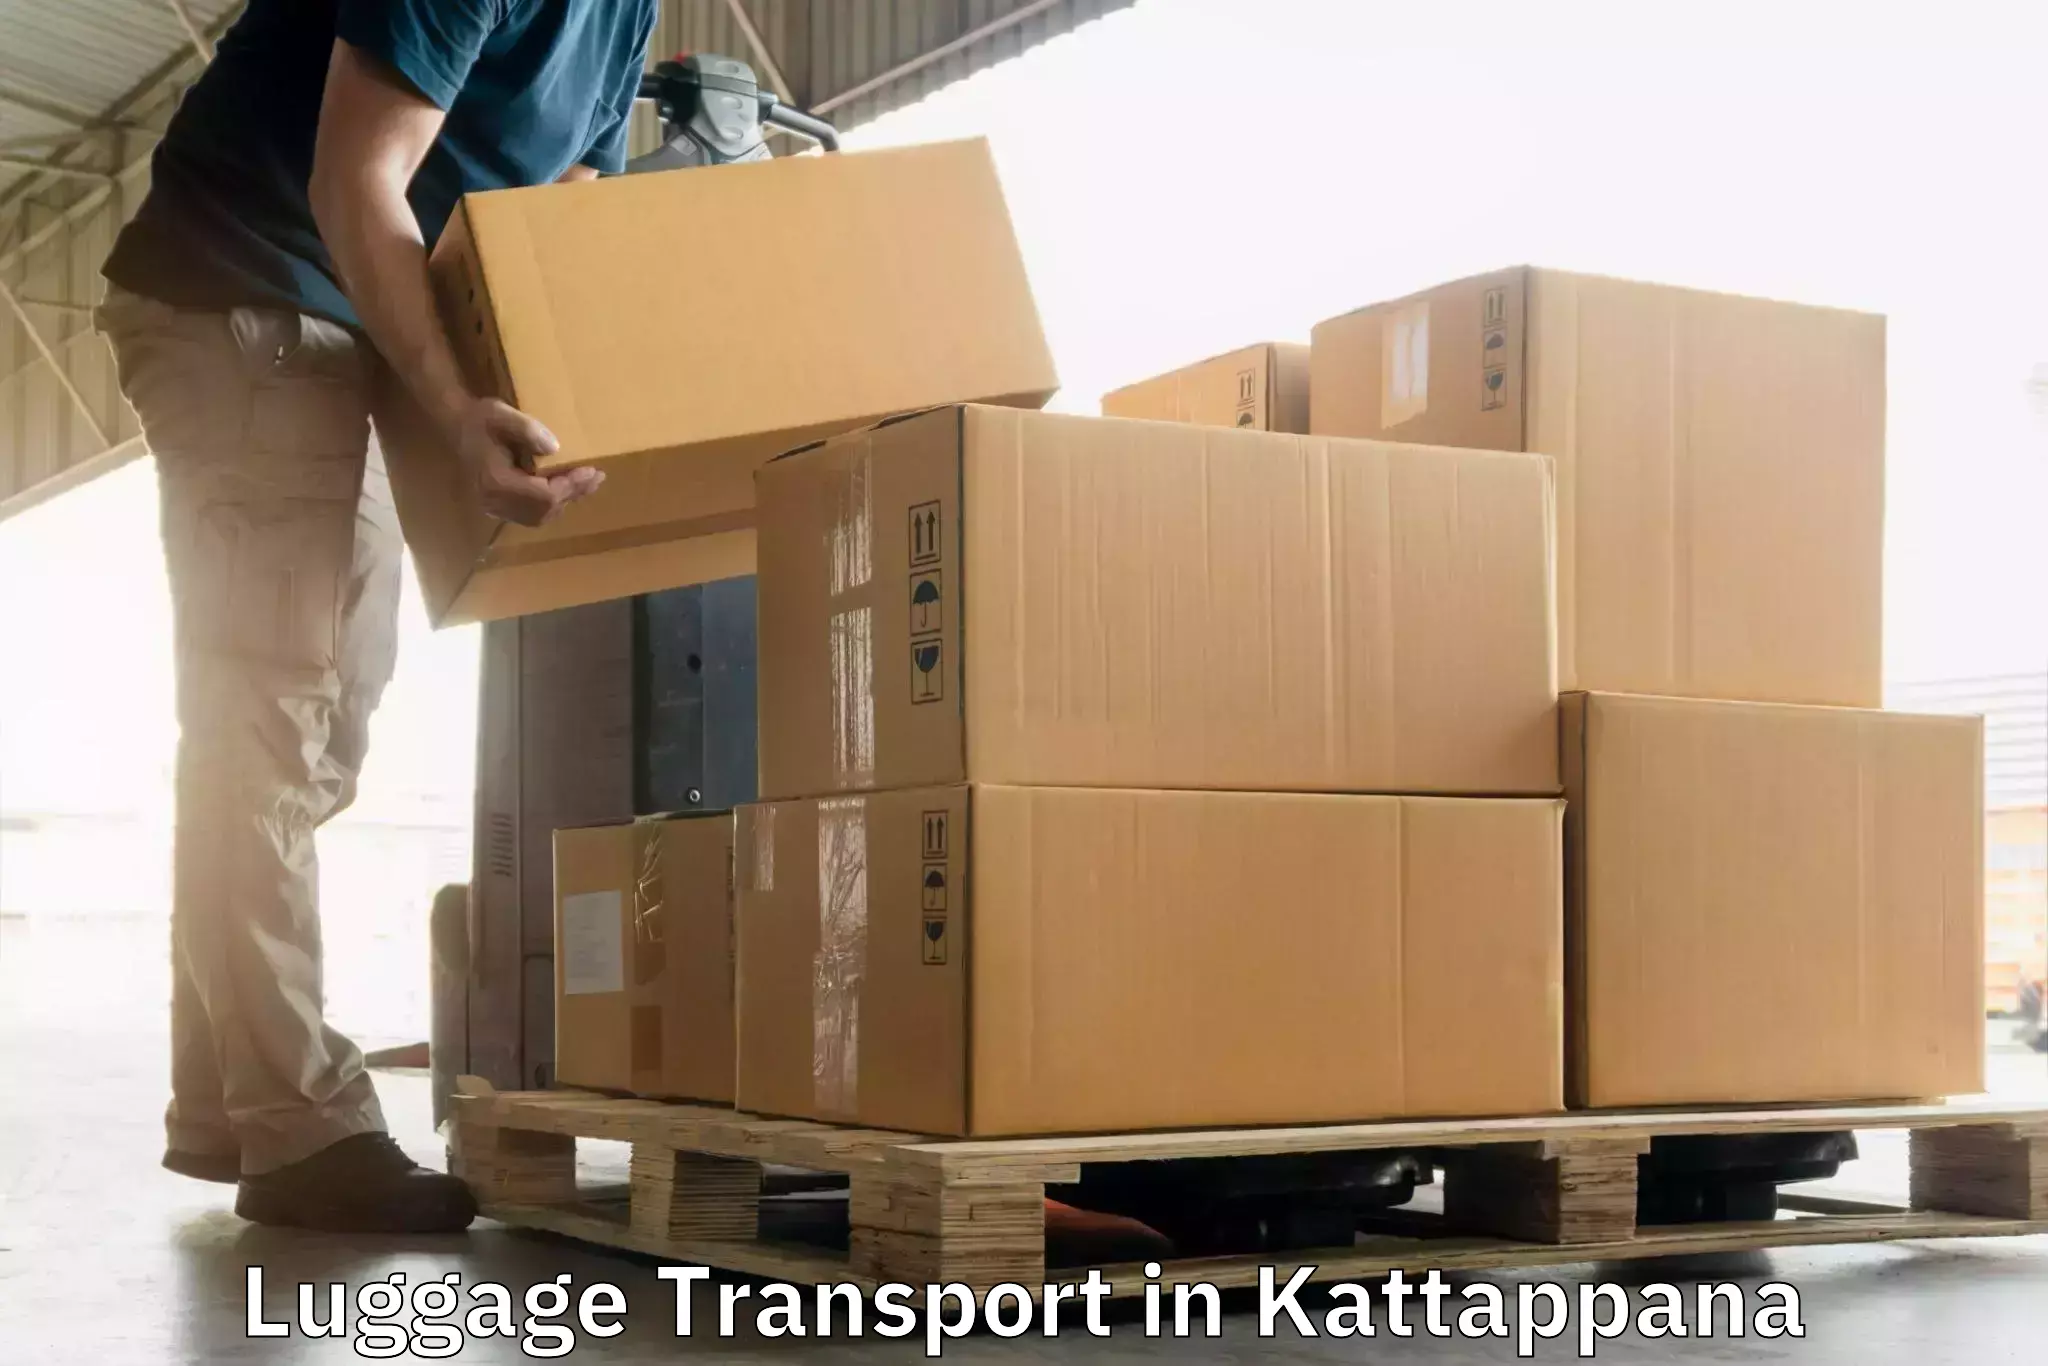 Luggage transport deals in Kattappana